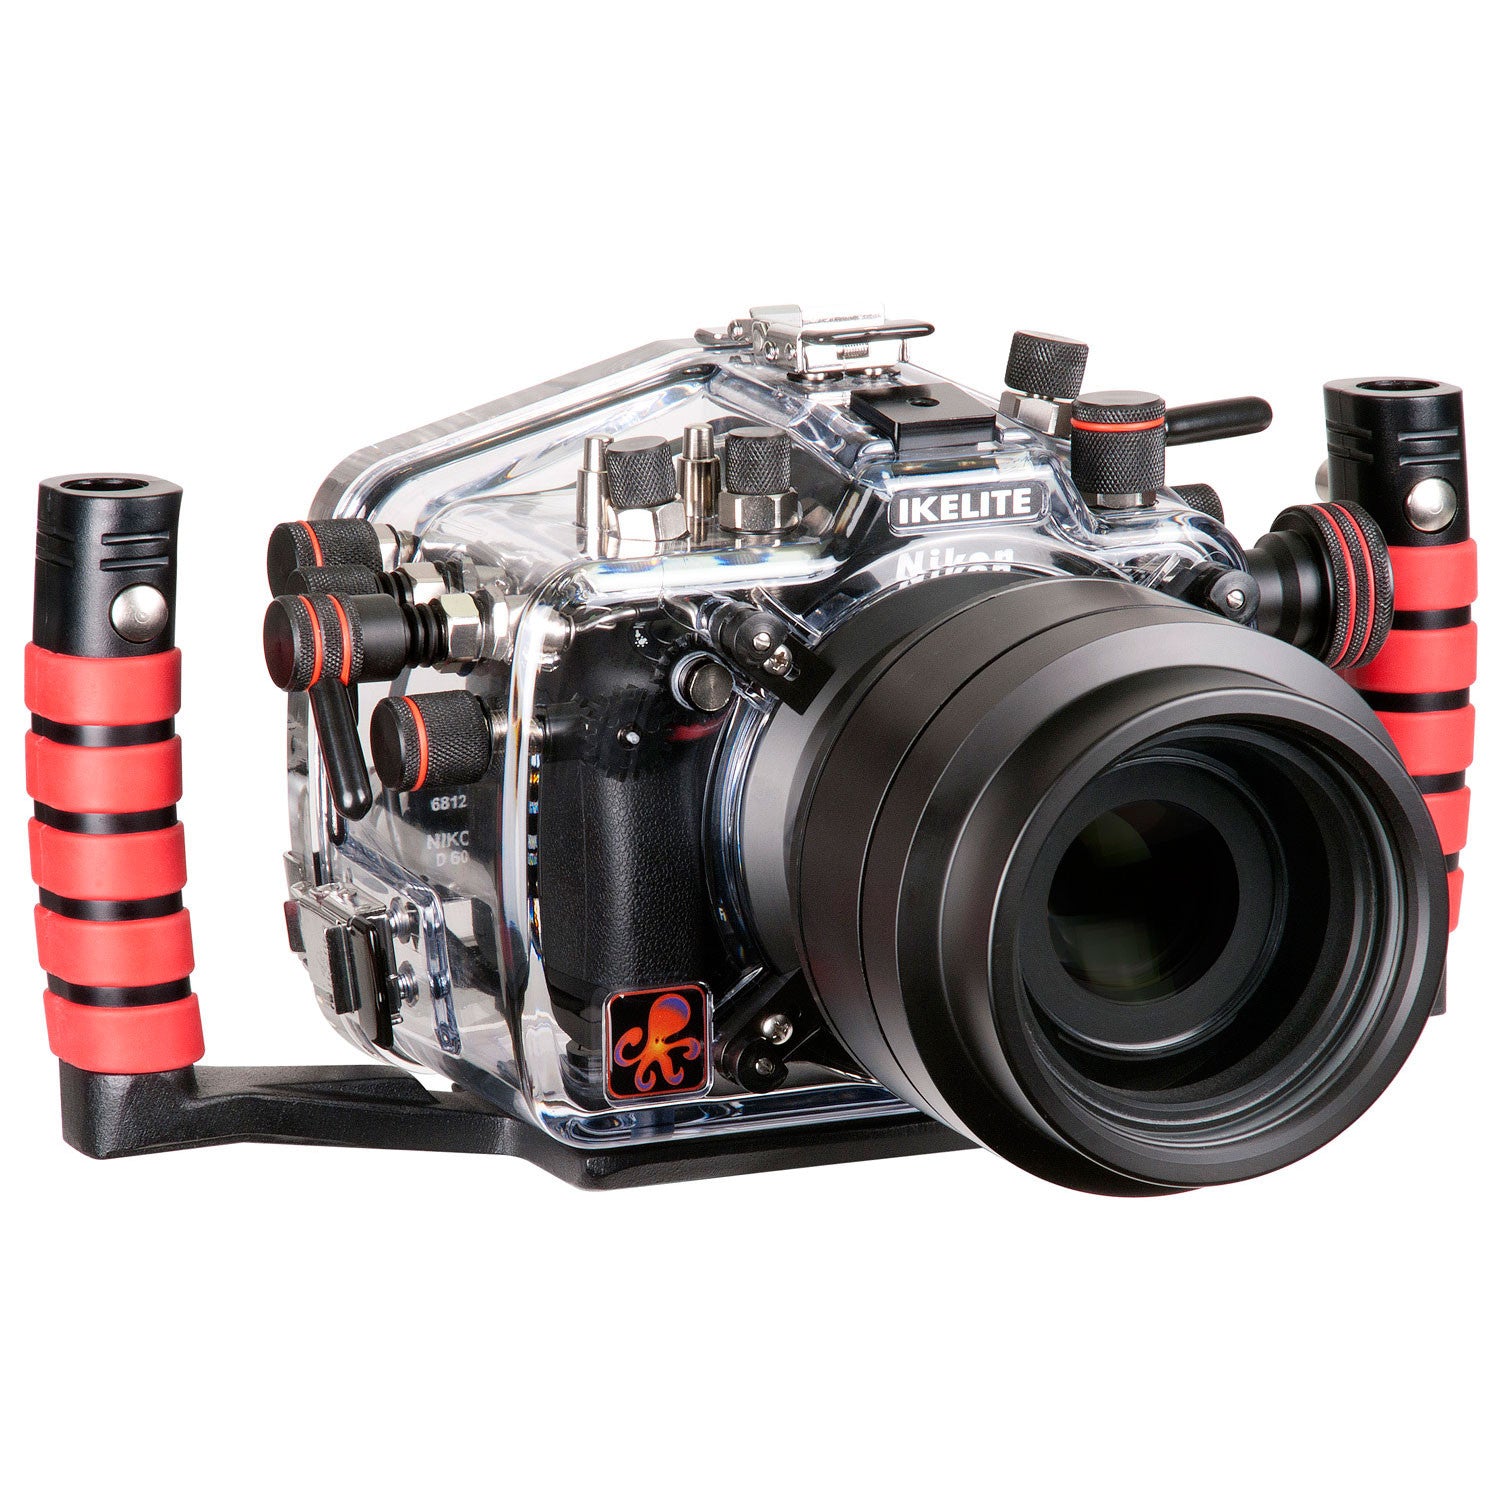 200FL Underwater TTL Housing for Nikon D600 D610 DSLR Cameras